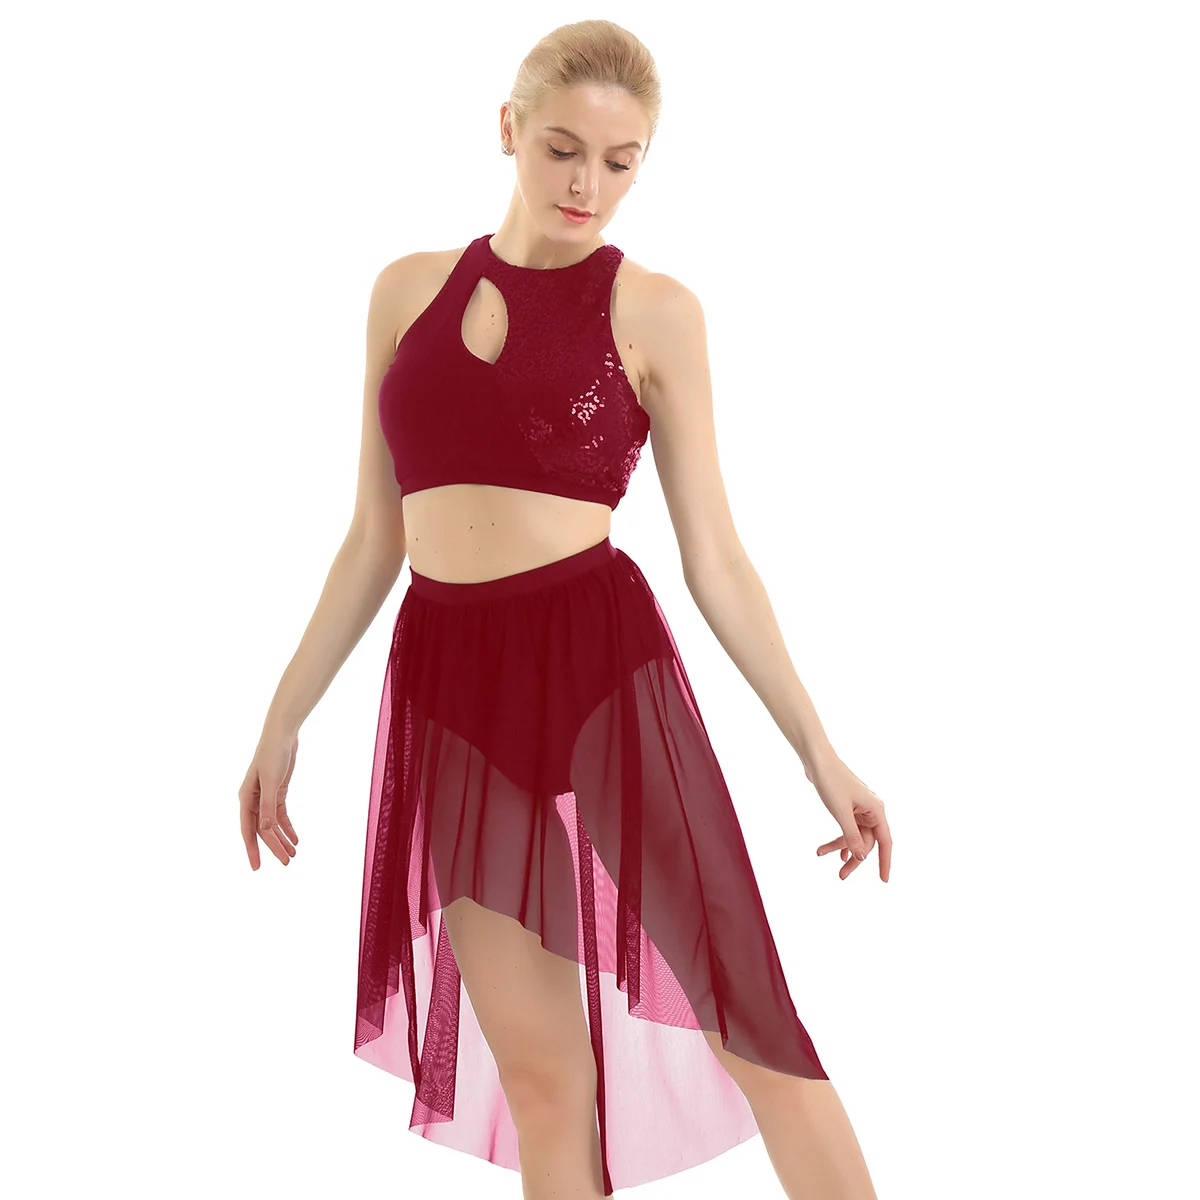 MSemis Woman Two Piece Cutout Lyrical Dance Dress Costumes Ballet Dance High Low Skirt Leotard 